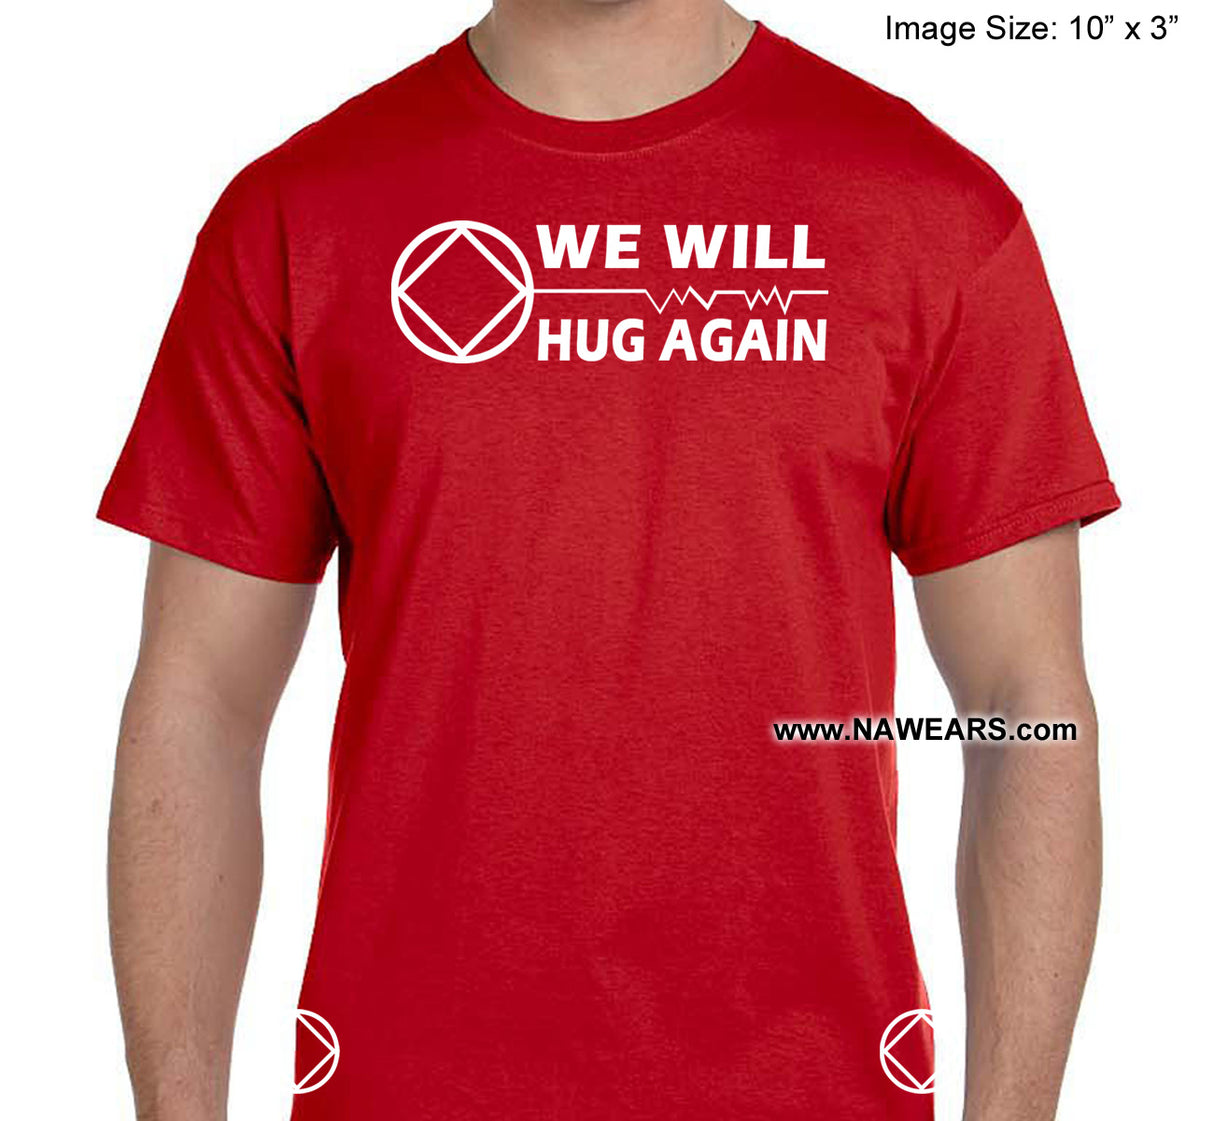 We Will Hug Again T-shirt CLEARANCE